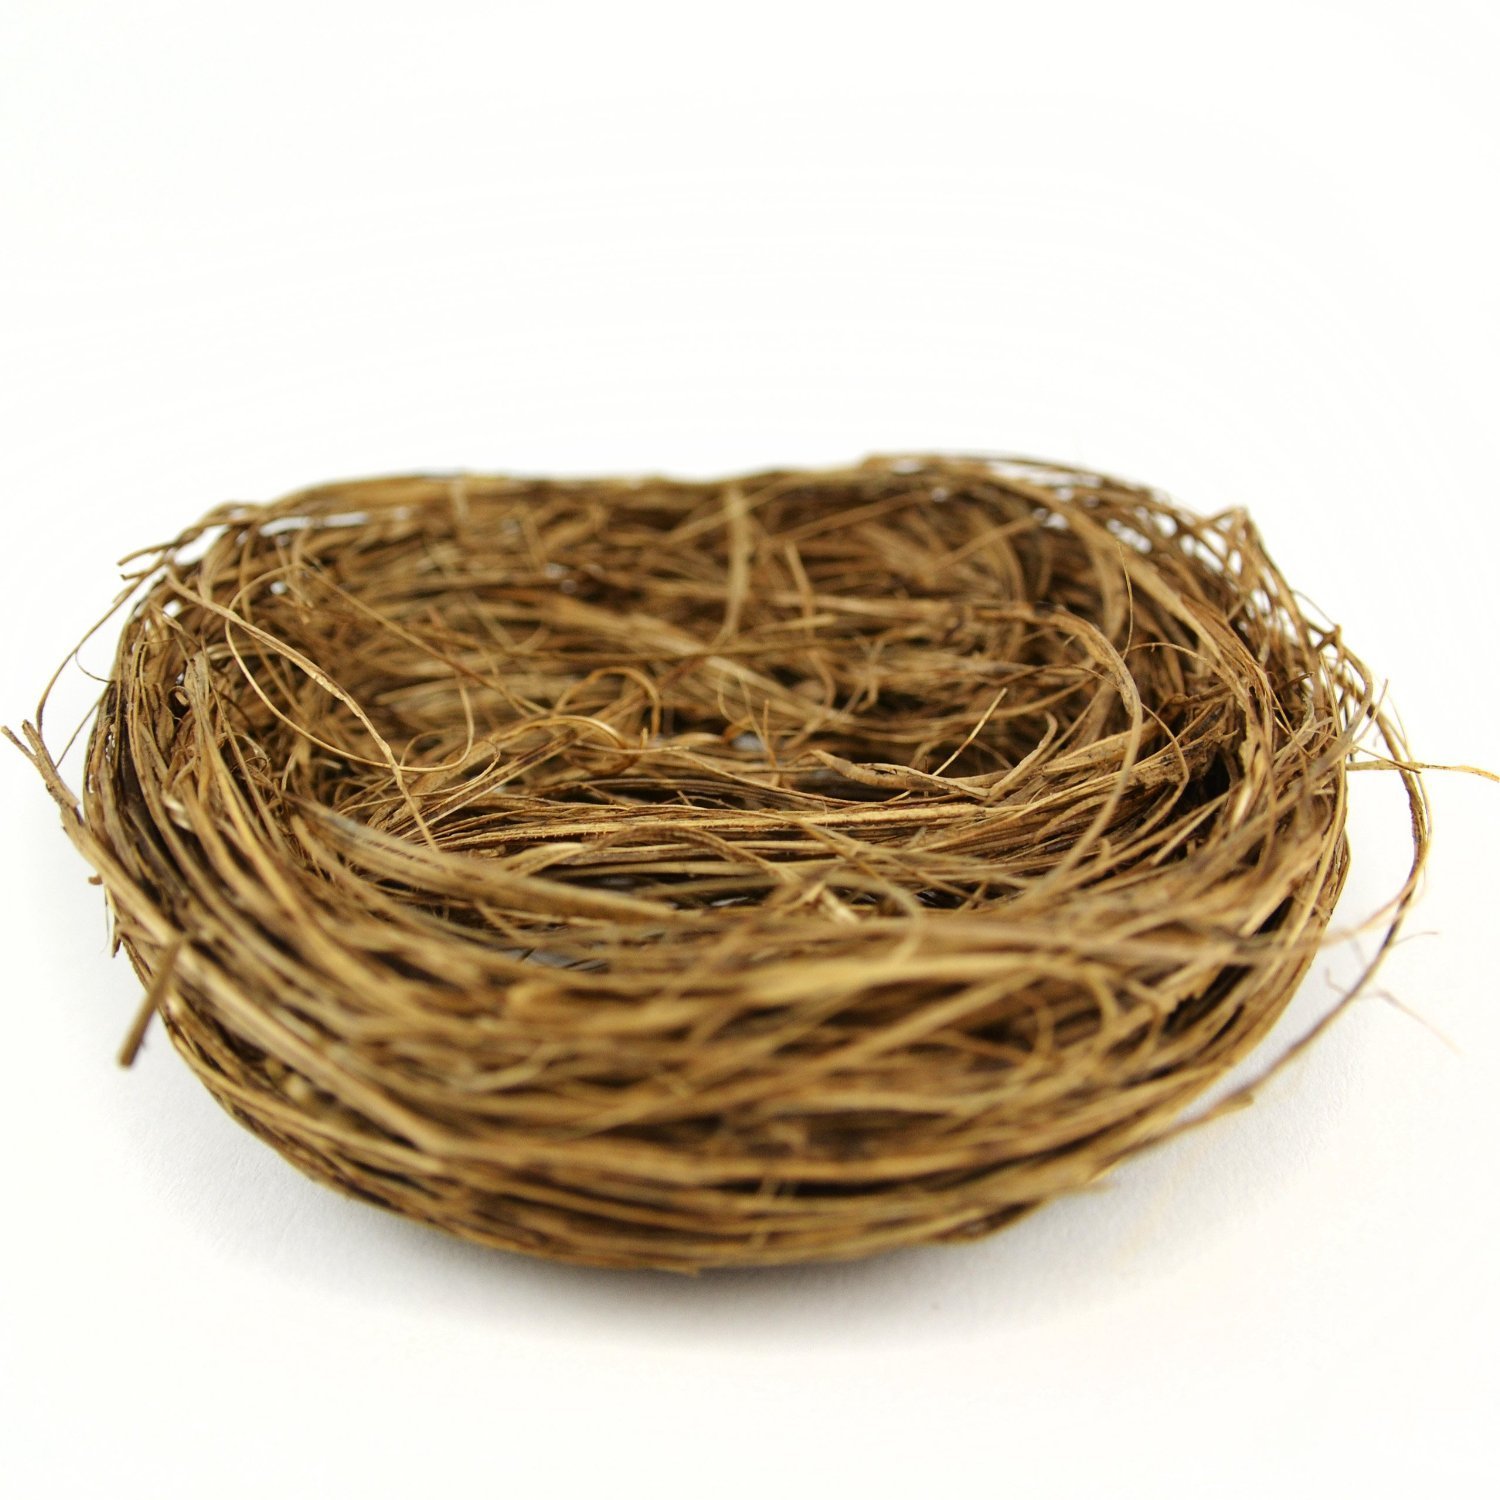 Amazon.com: Creative Hobbies Natural Twig Birds Nests 4 inch -Great ...